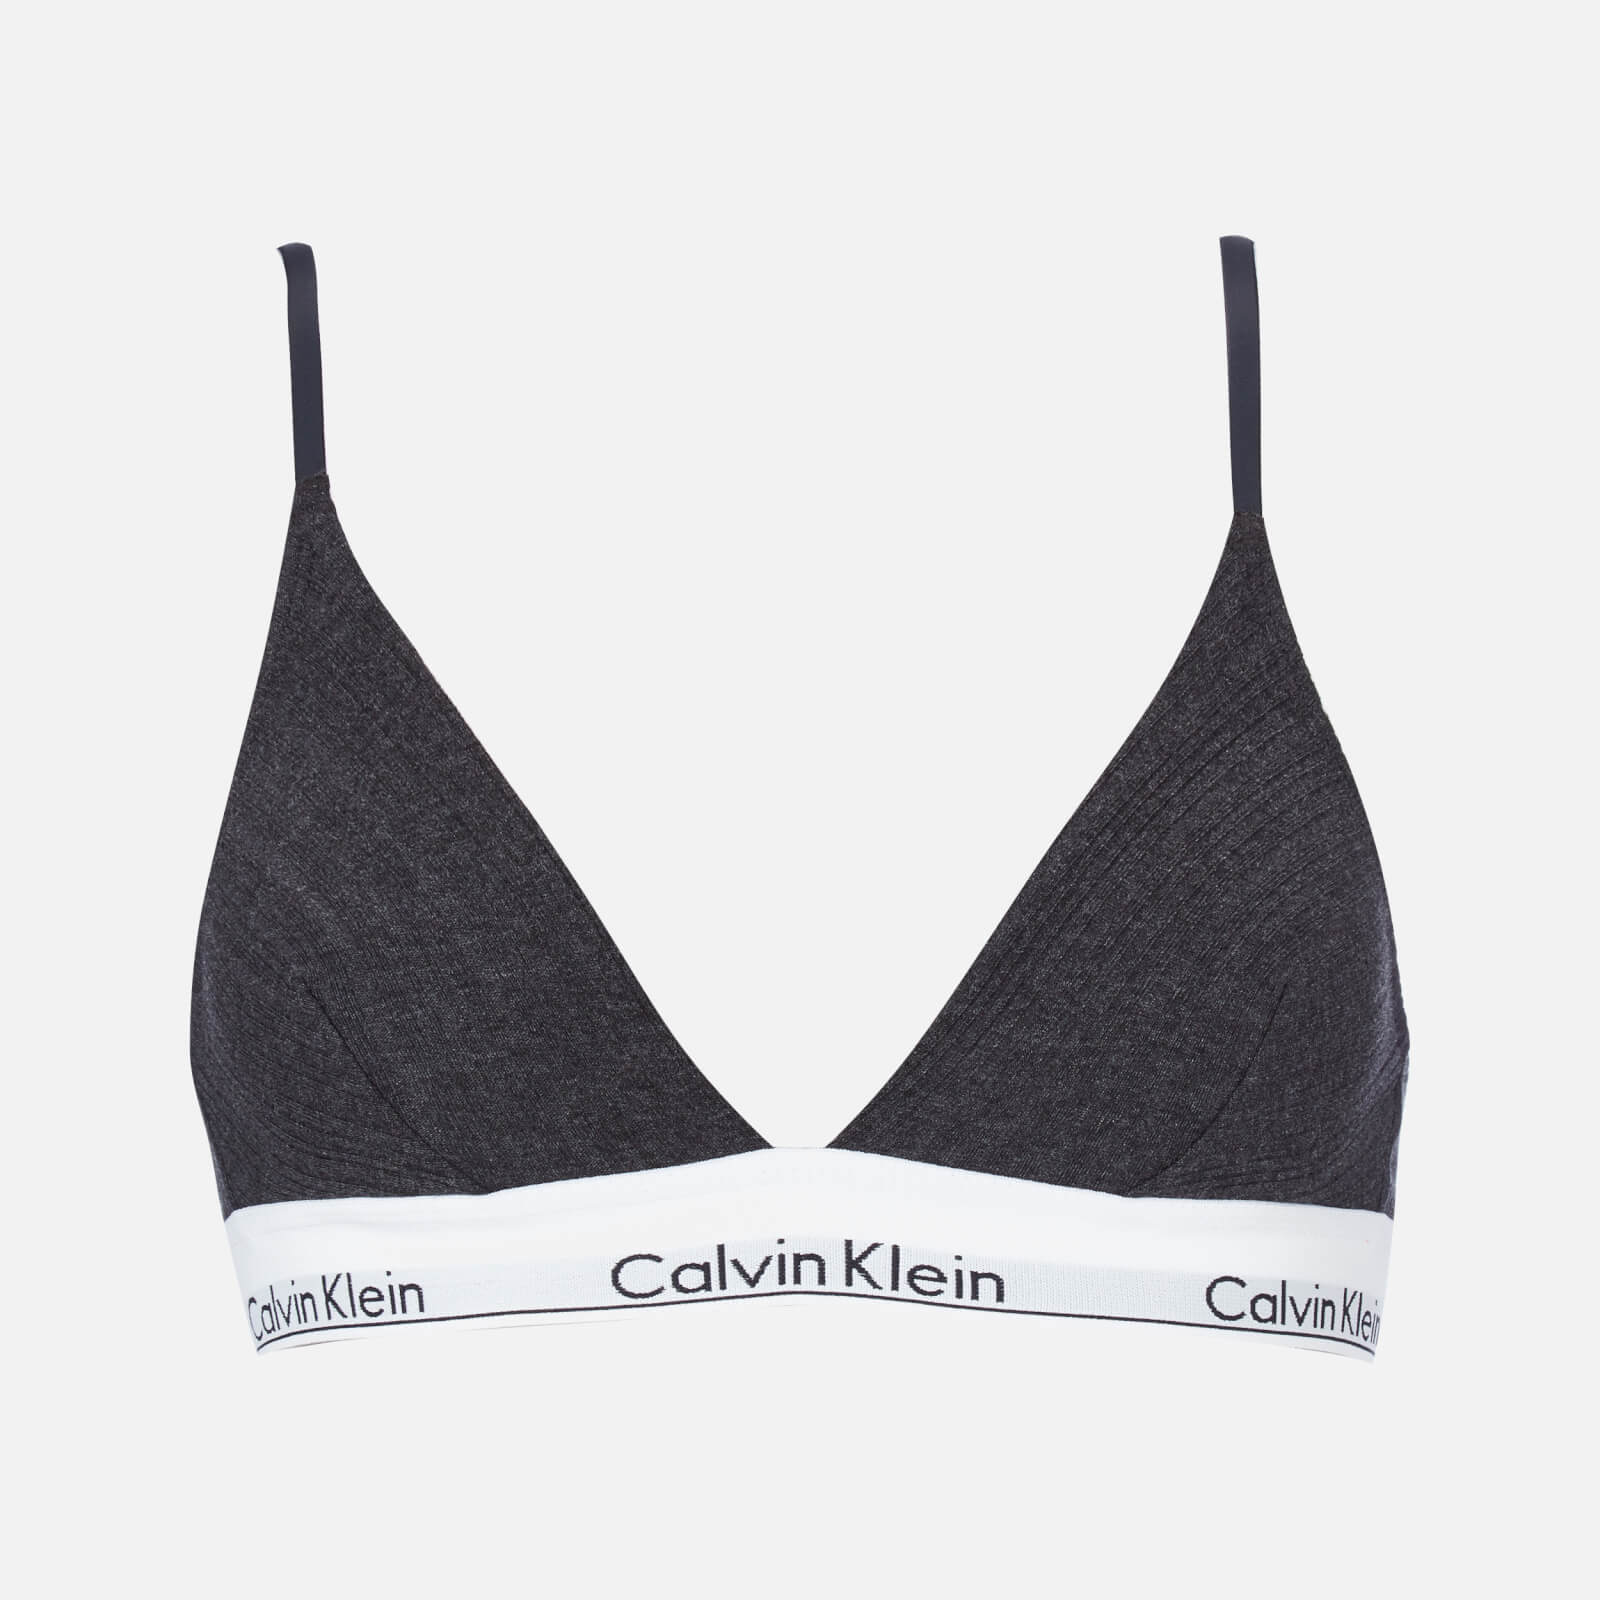 Calvin Klein Triangle Bra Size Chart